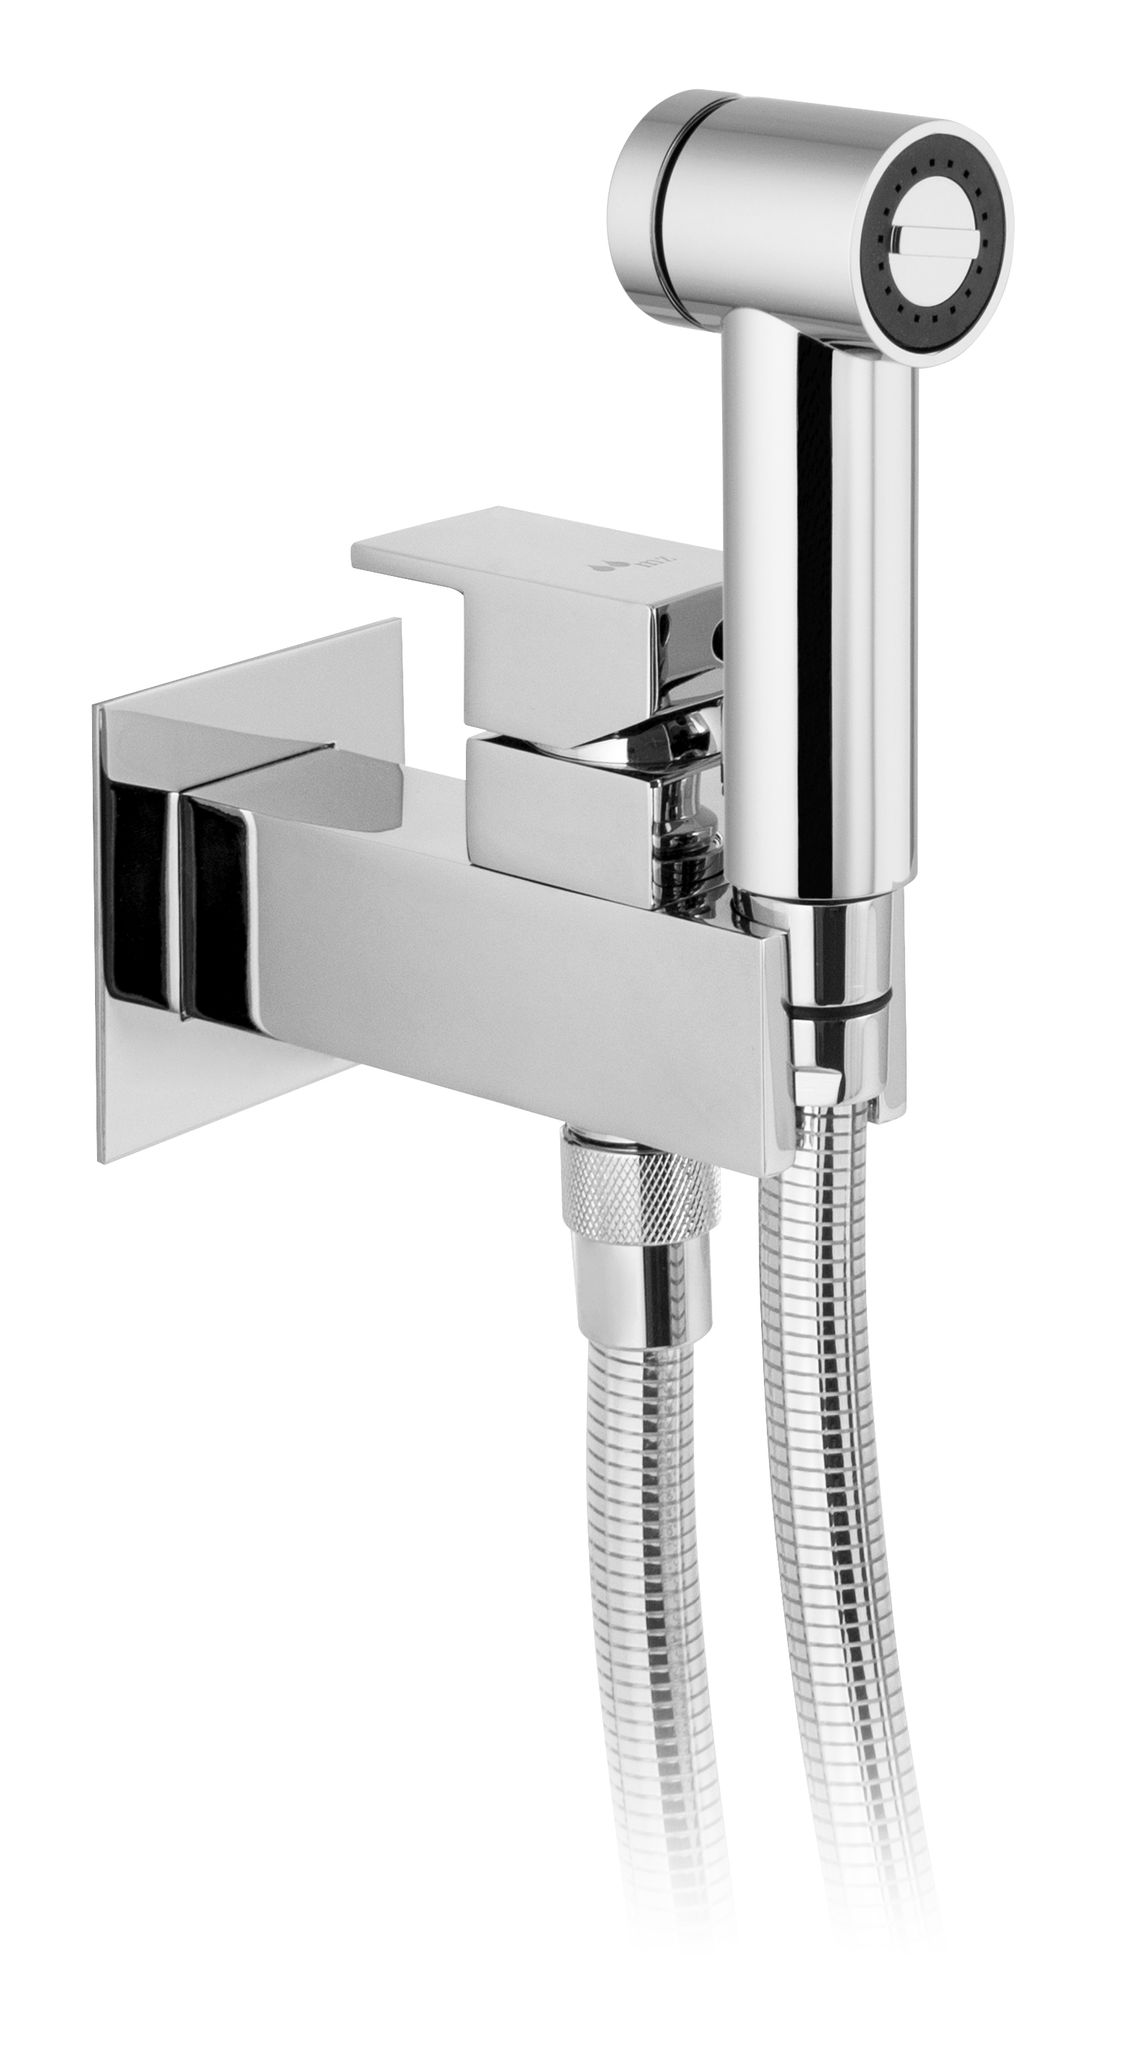 Built-in- Bidet Faucets | Porcemall